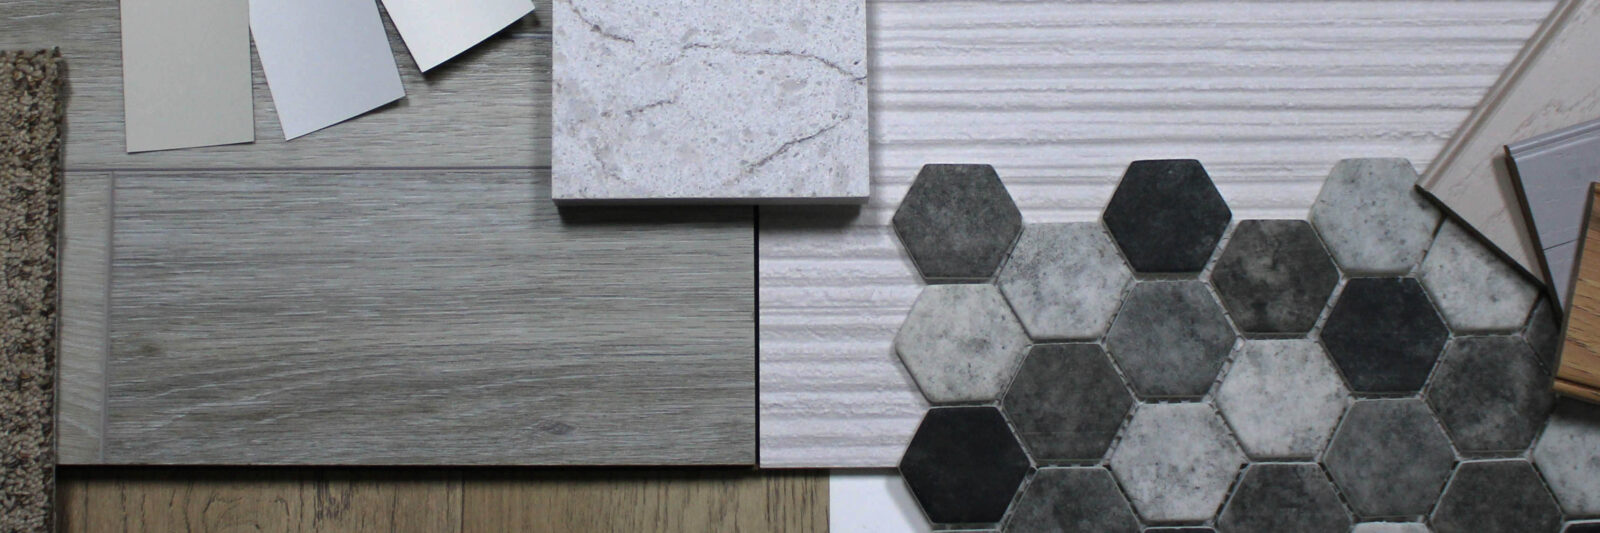 frisco flooring interior design mood board